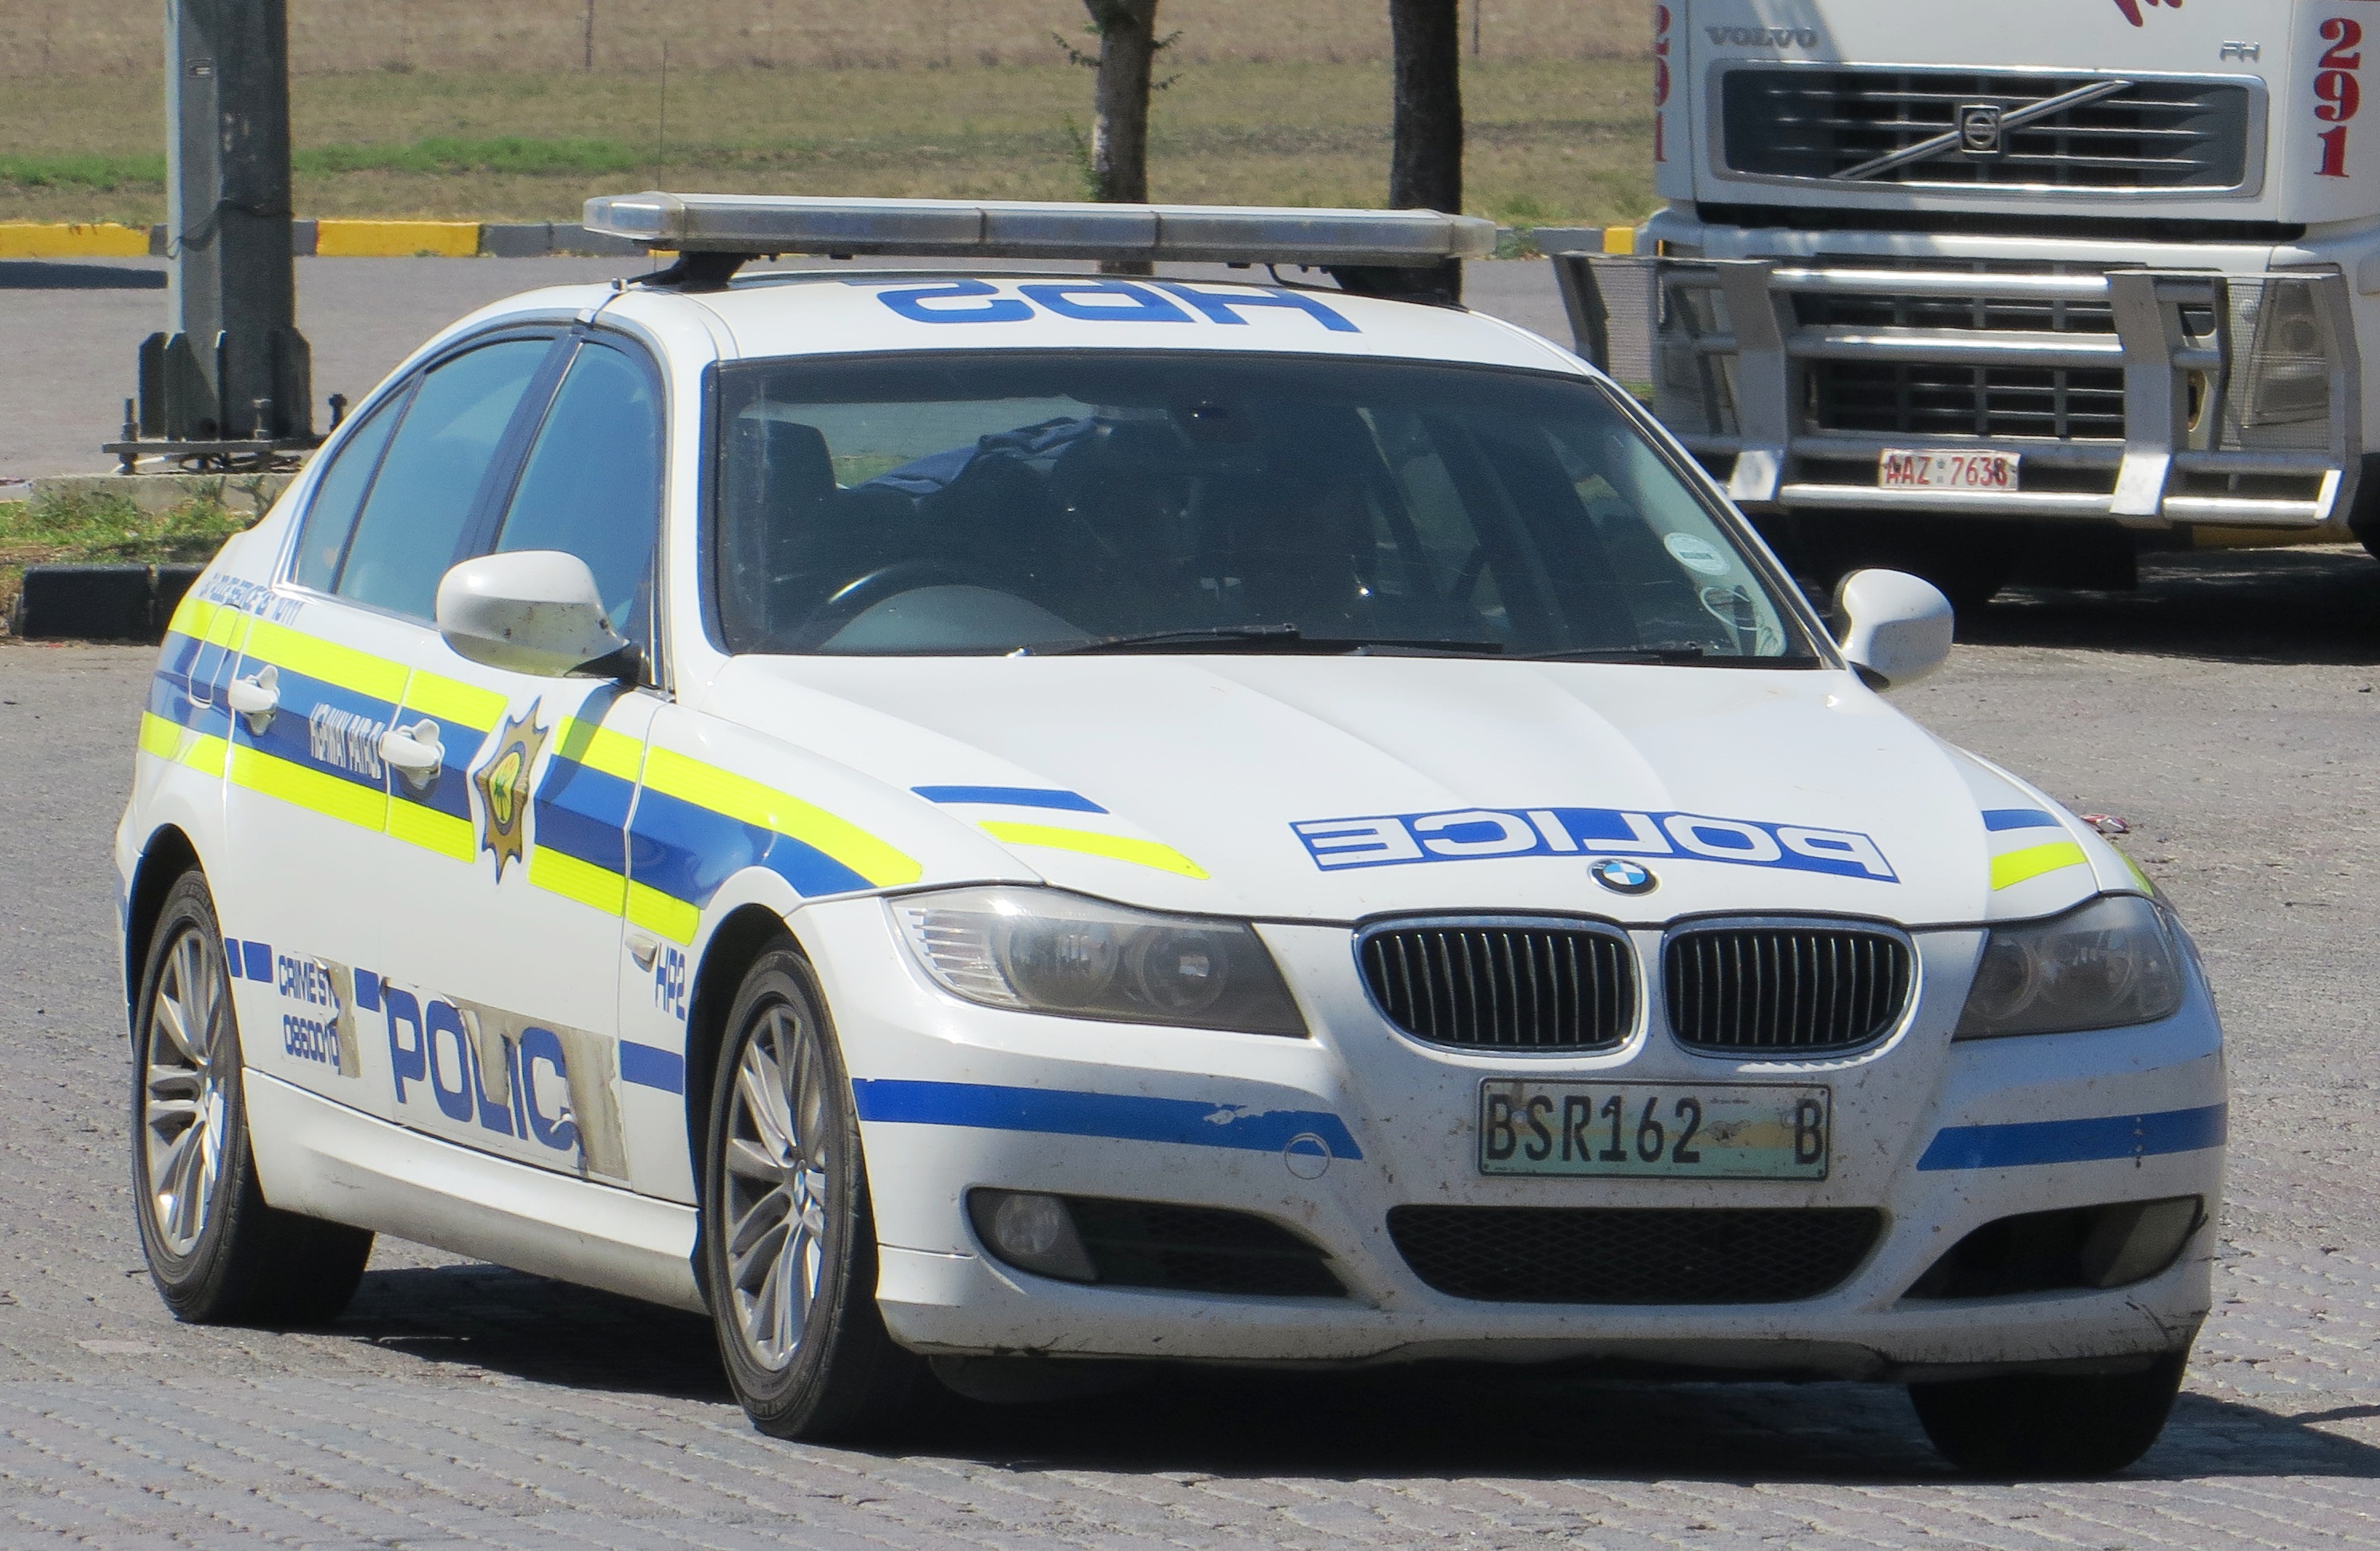 South_African_Police_car_-_higway_patrol.JPG